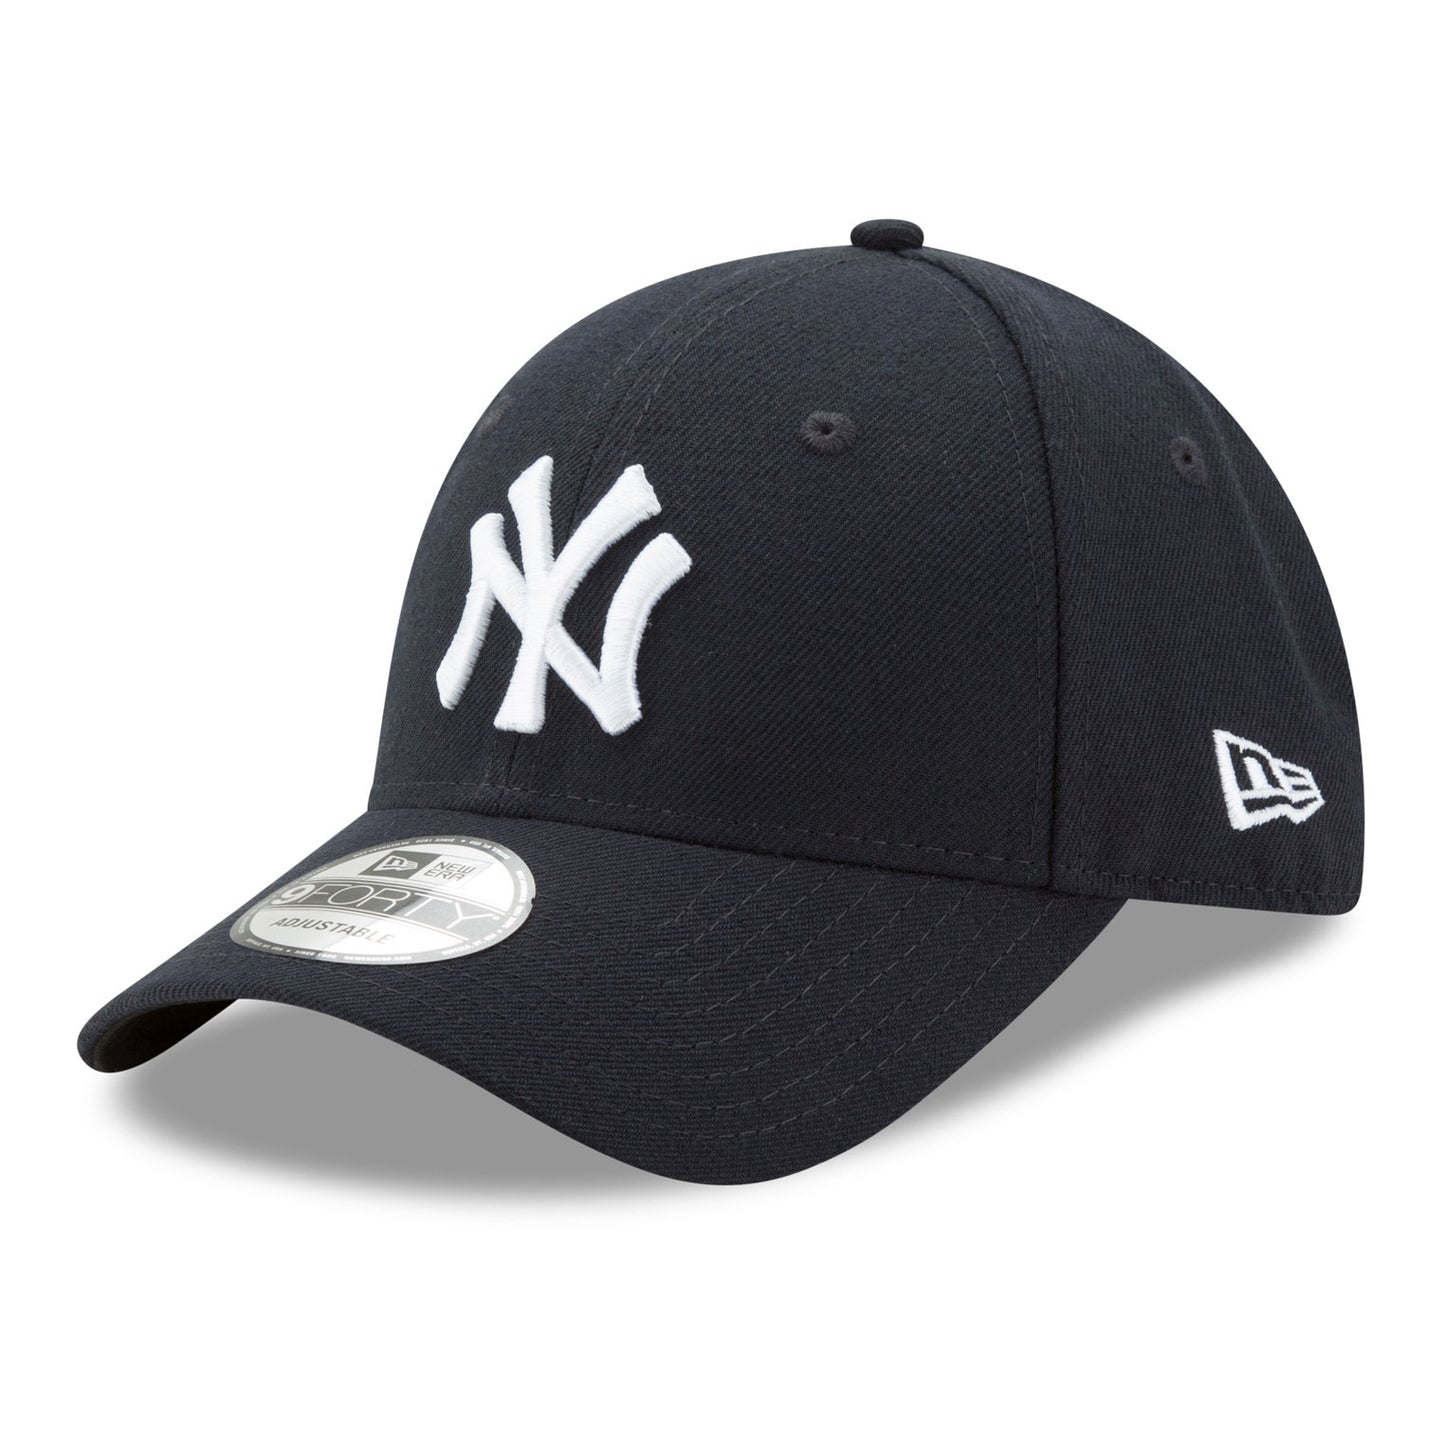 THE LEAGUE New York Yankees 9FORTY New Era Cap